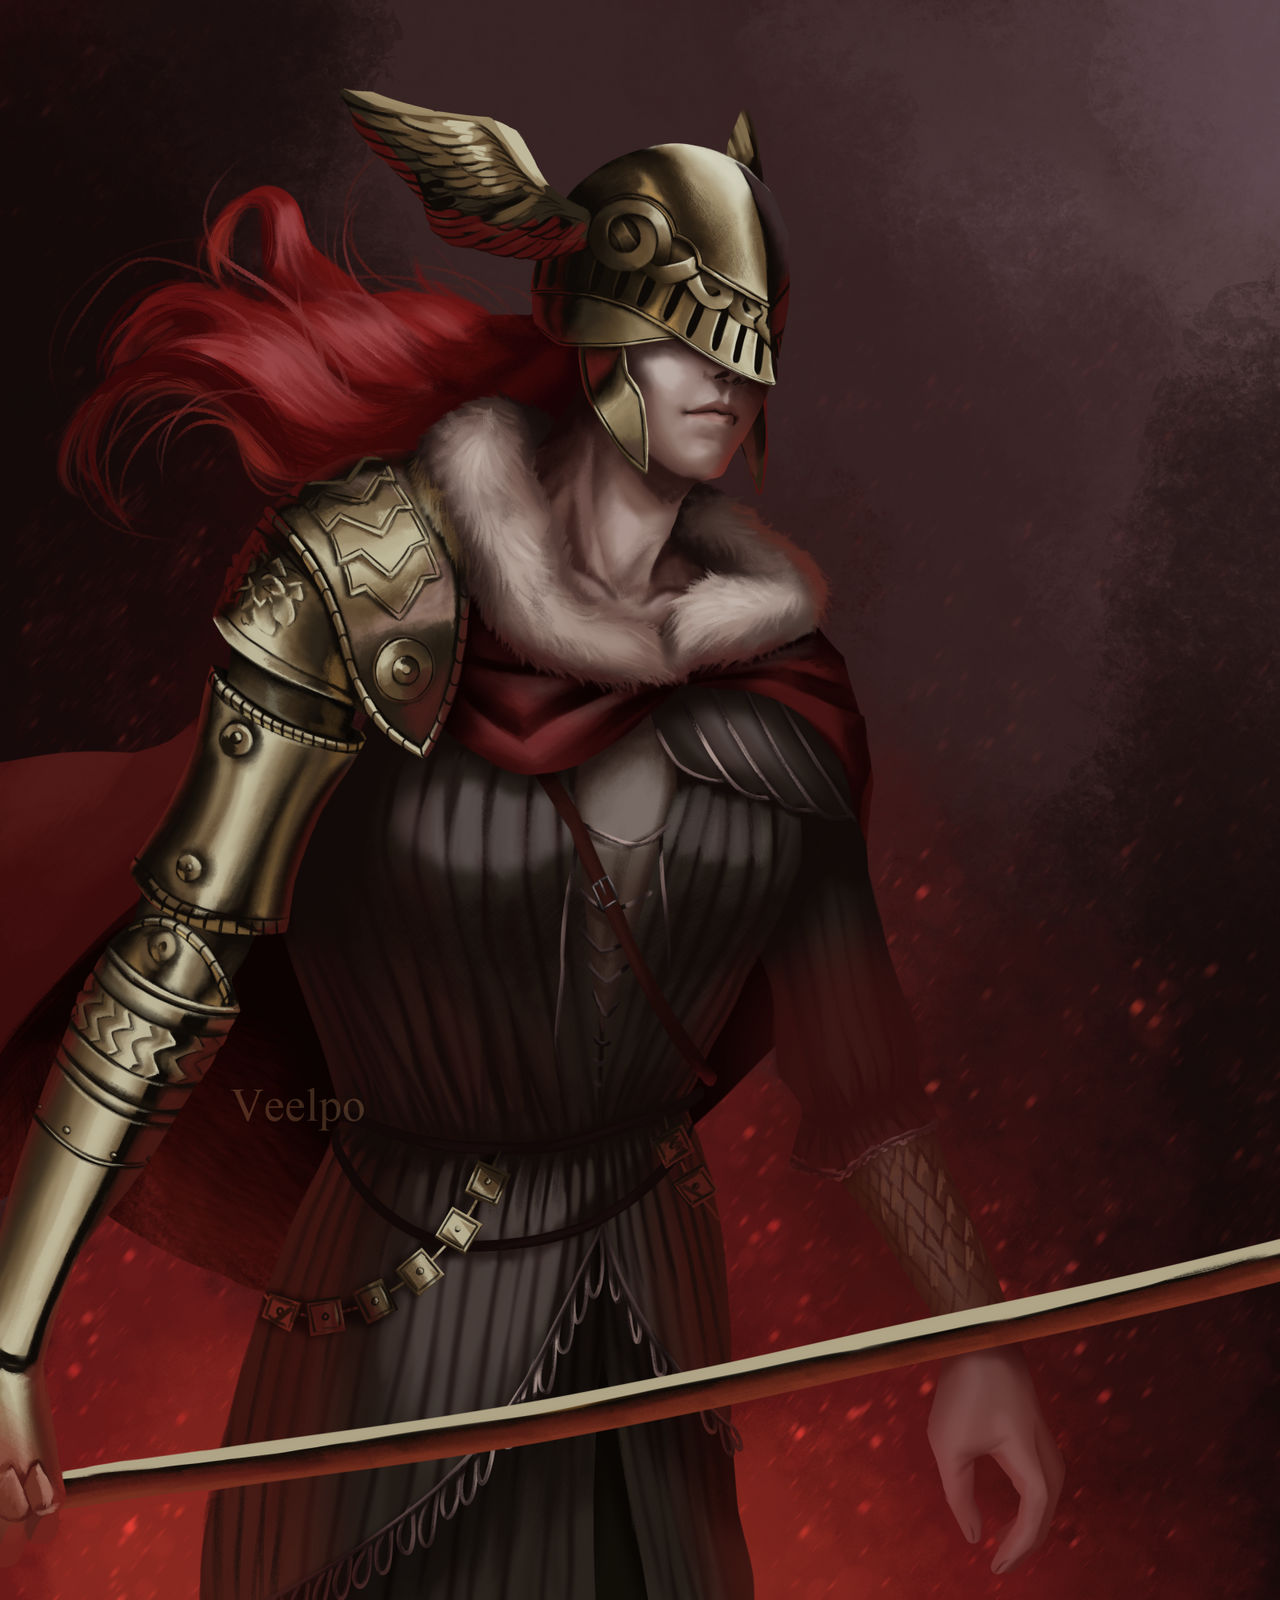 Malenia, Blade of Miquella (Elden Ring) by aransevla on DeviantArt